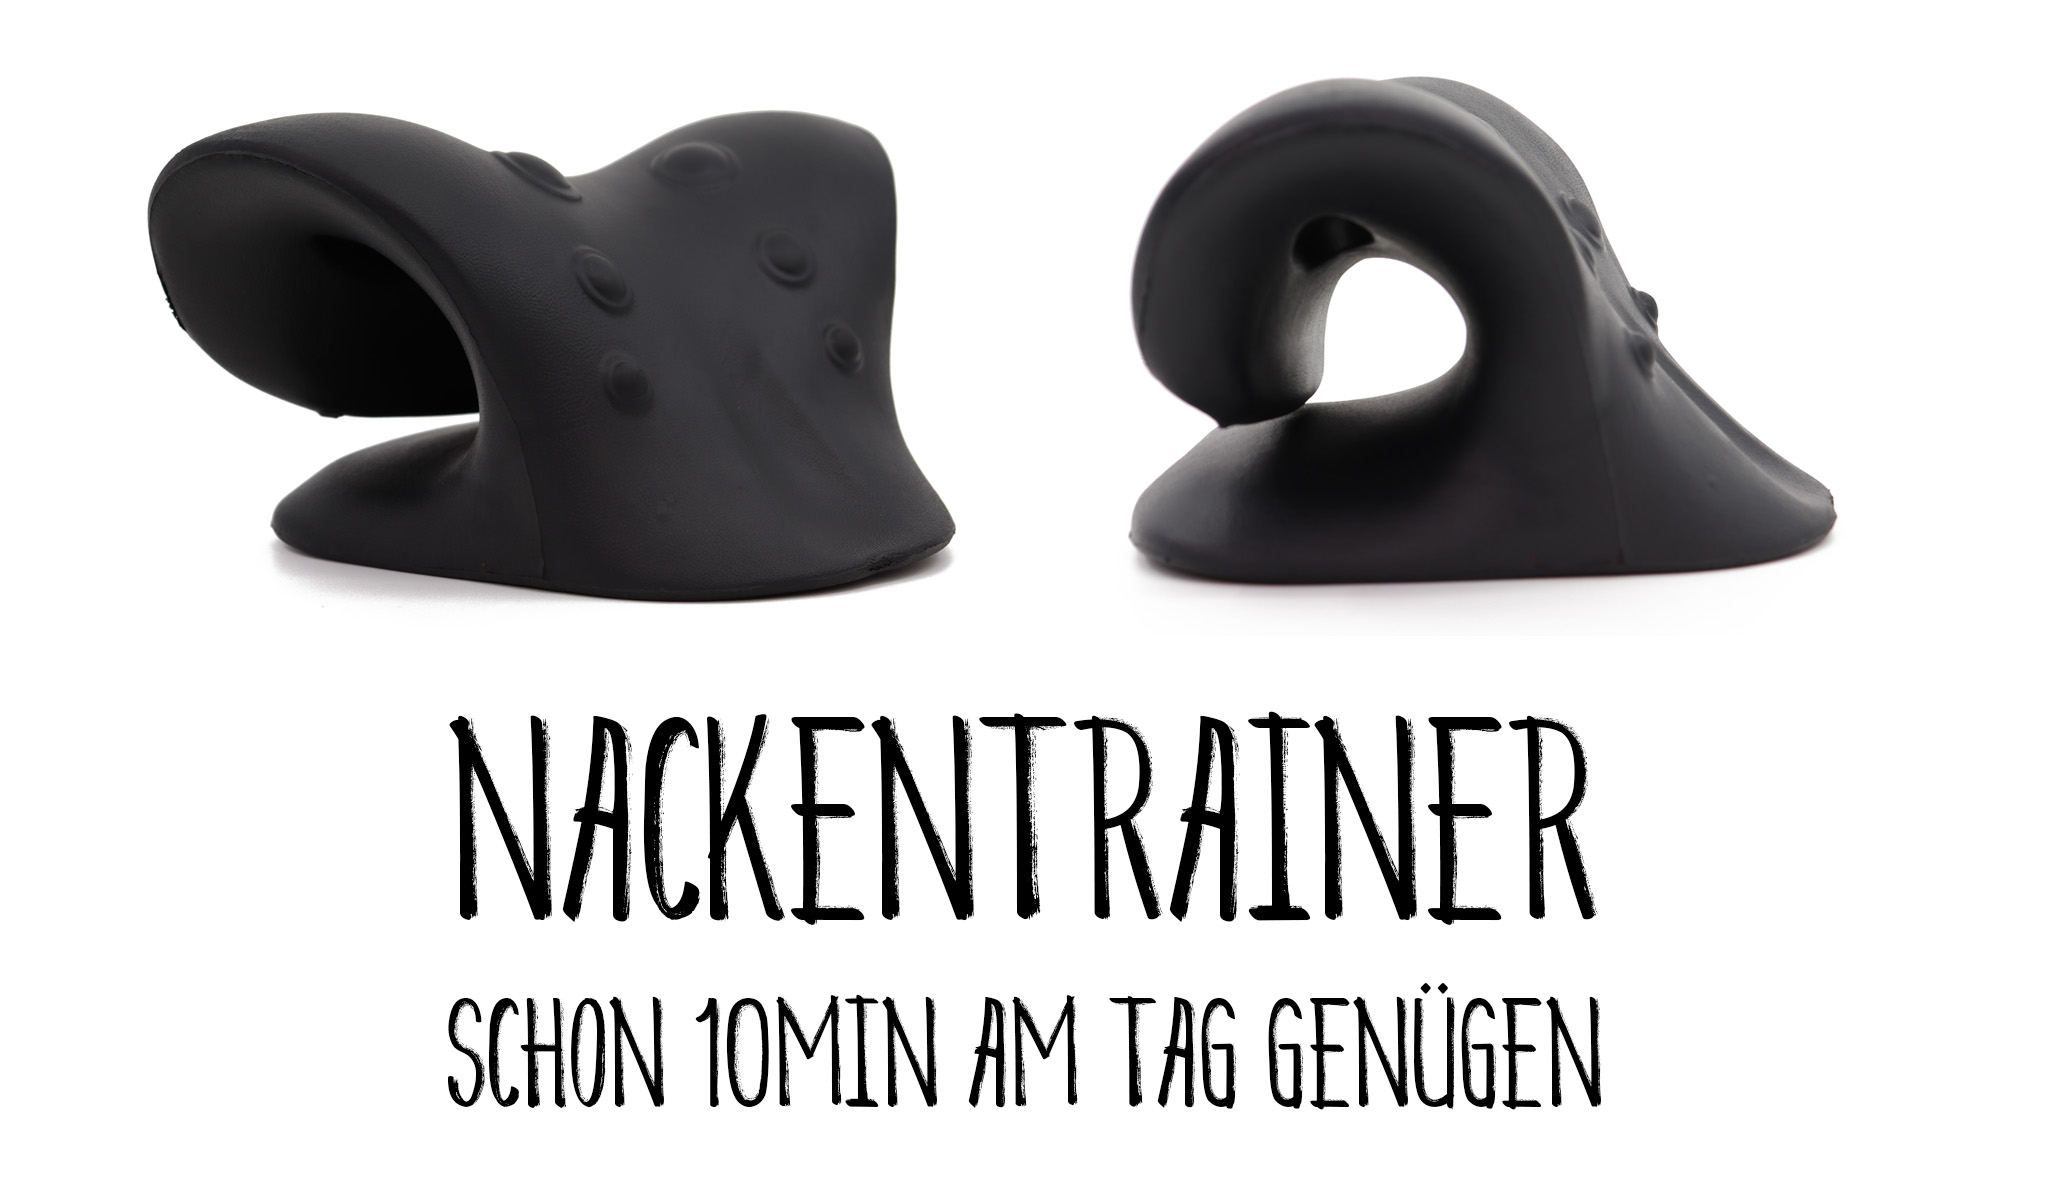 Nackentrainer - Nackenstretcher